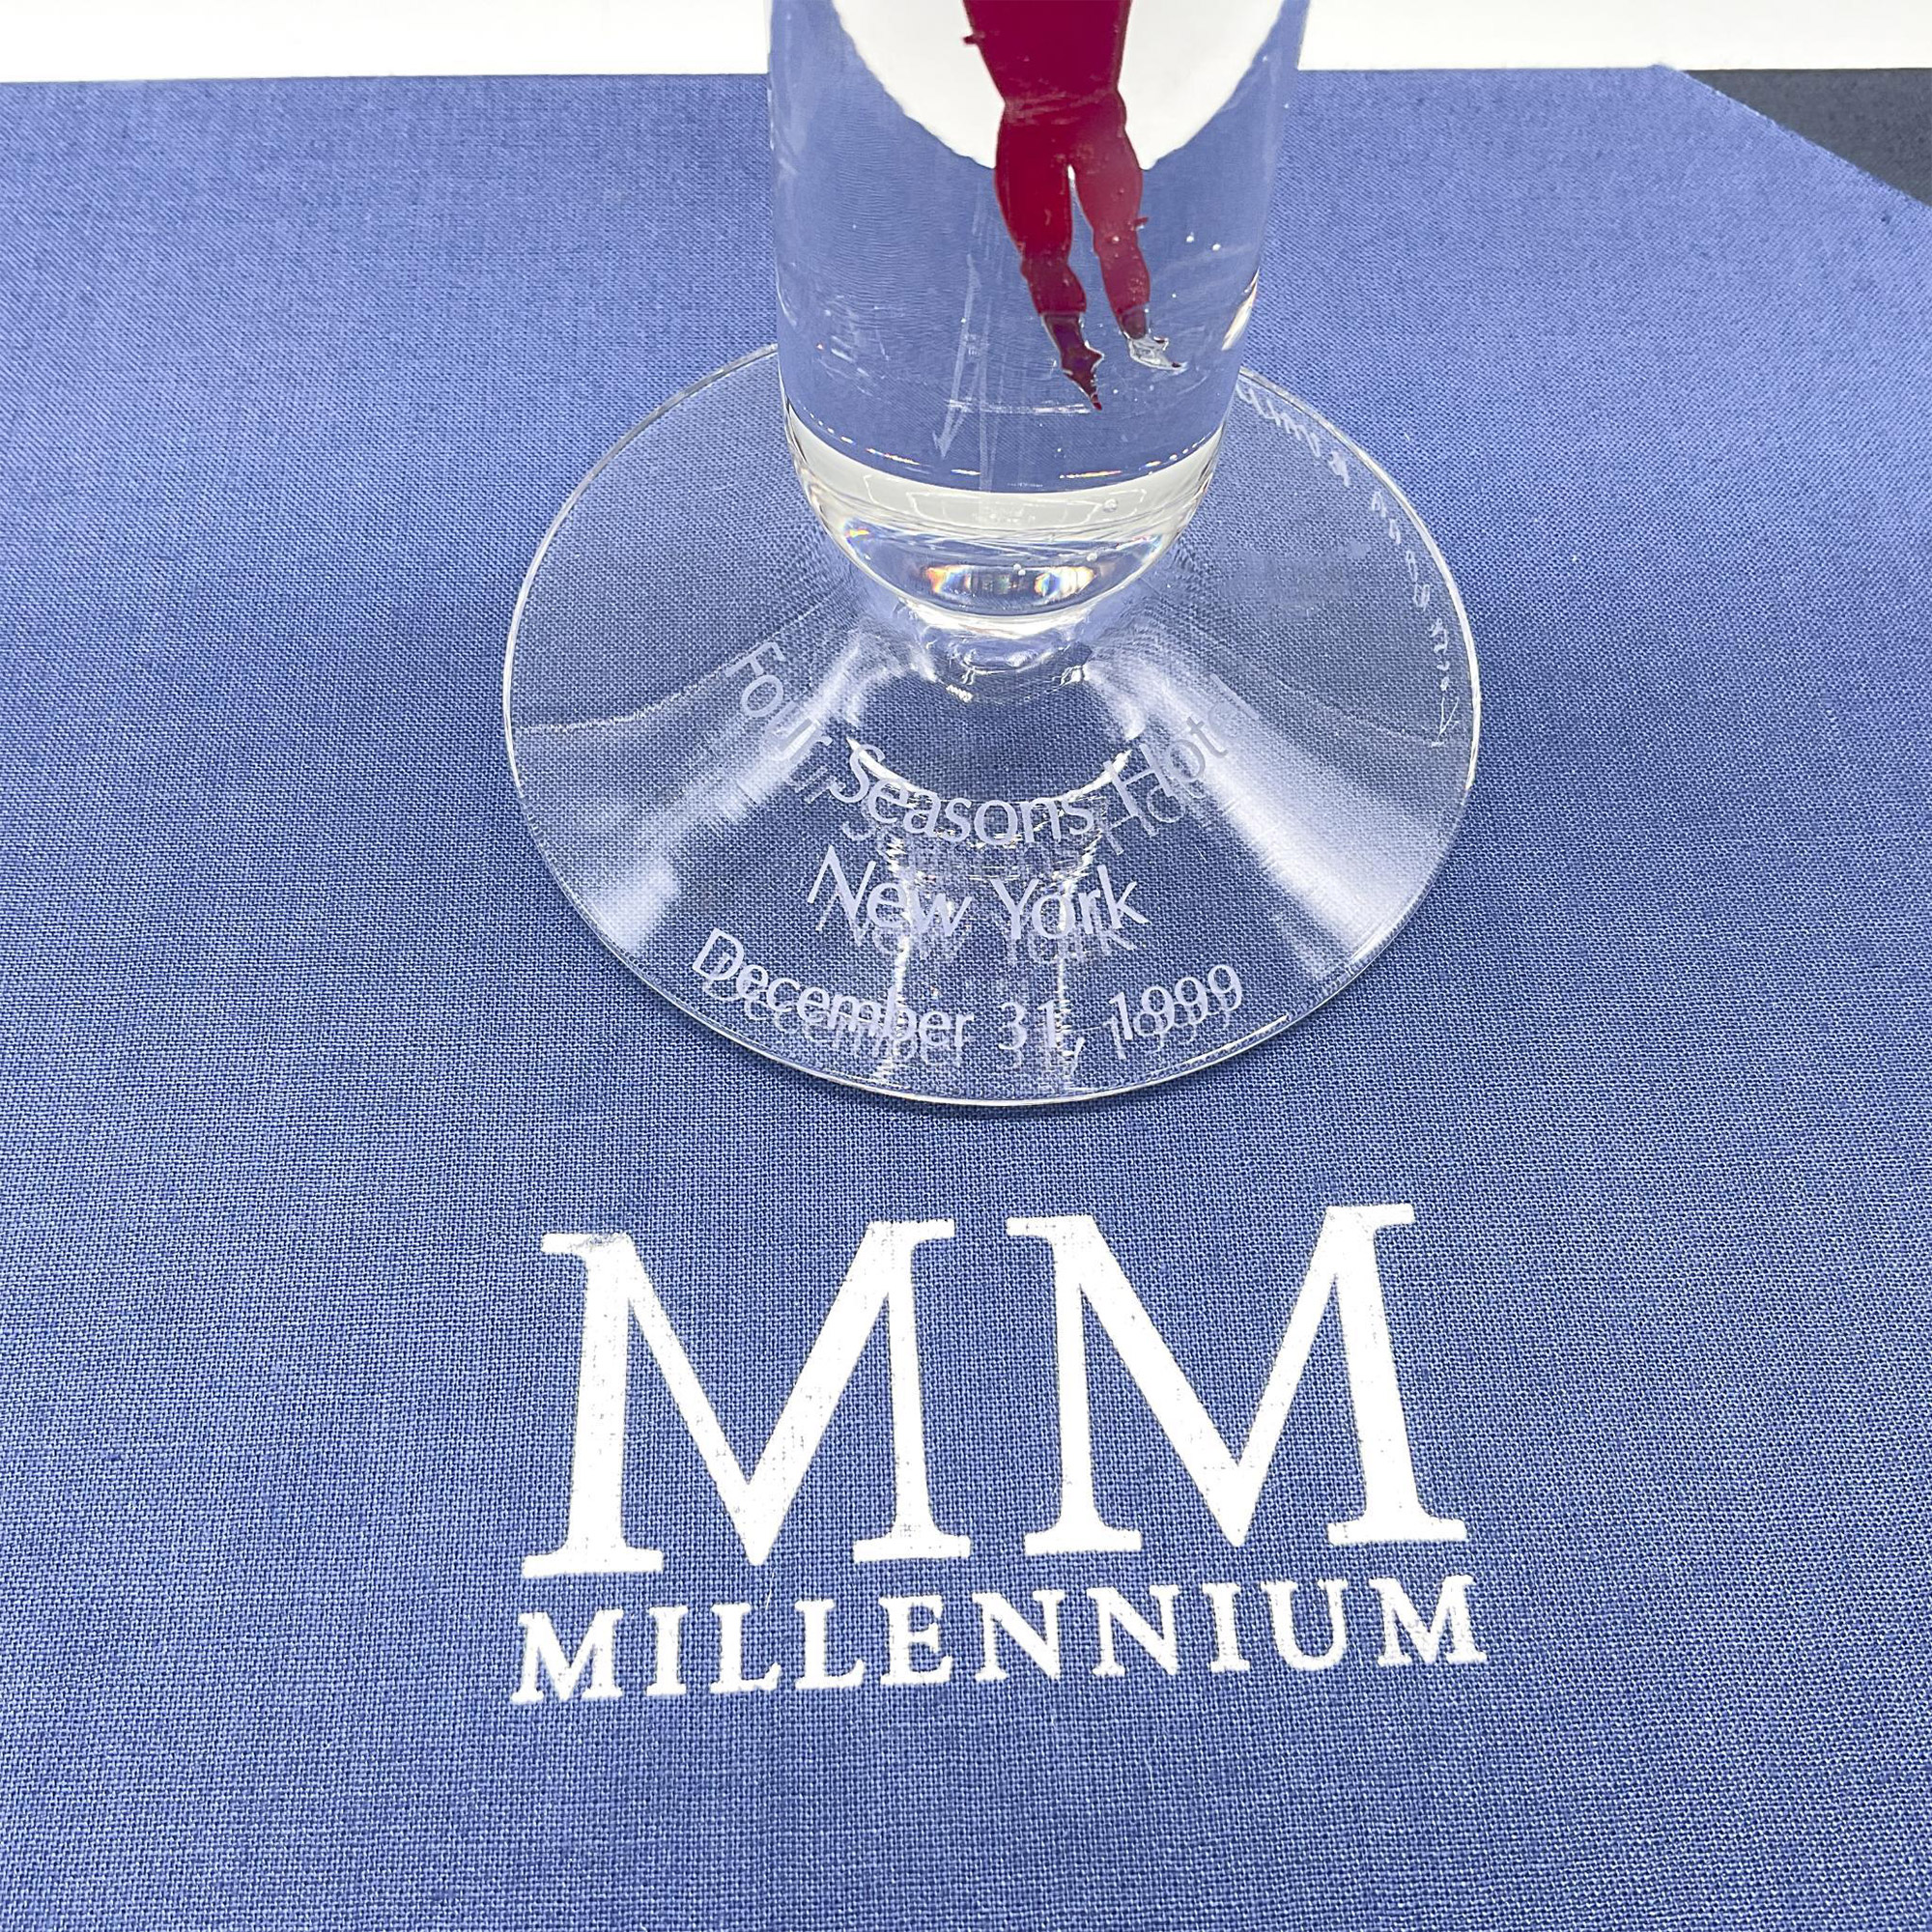 Pair of Kosta Boda Champagne Glasses, MM Millennium - Image 4 of 5